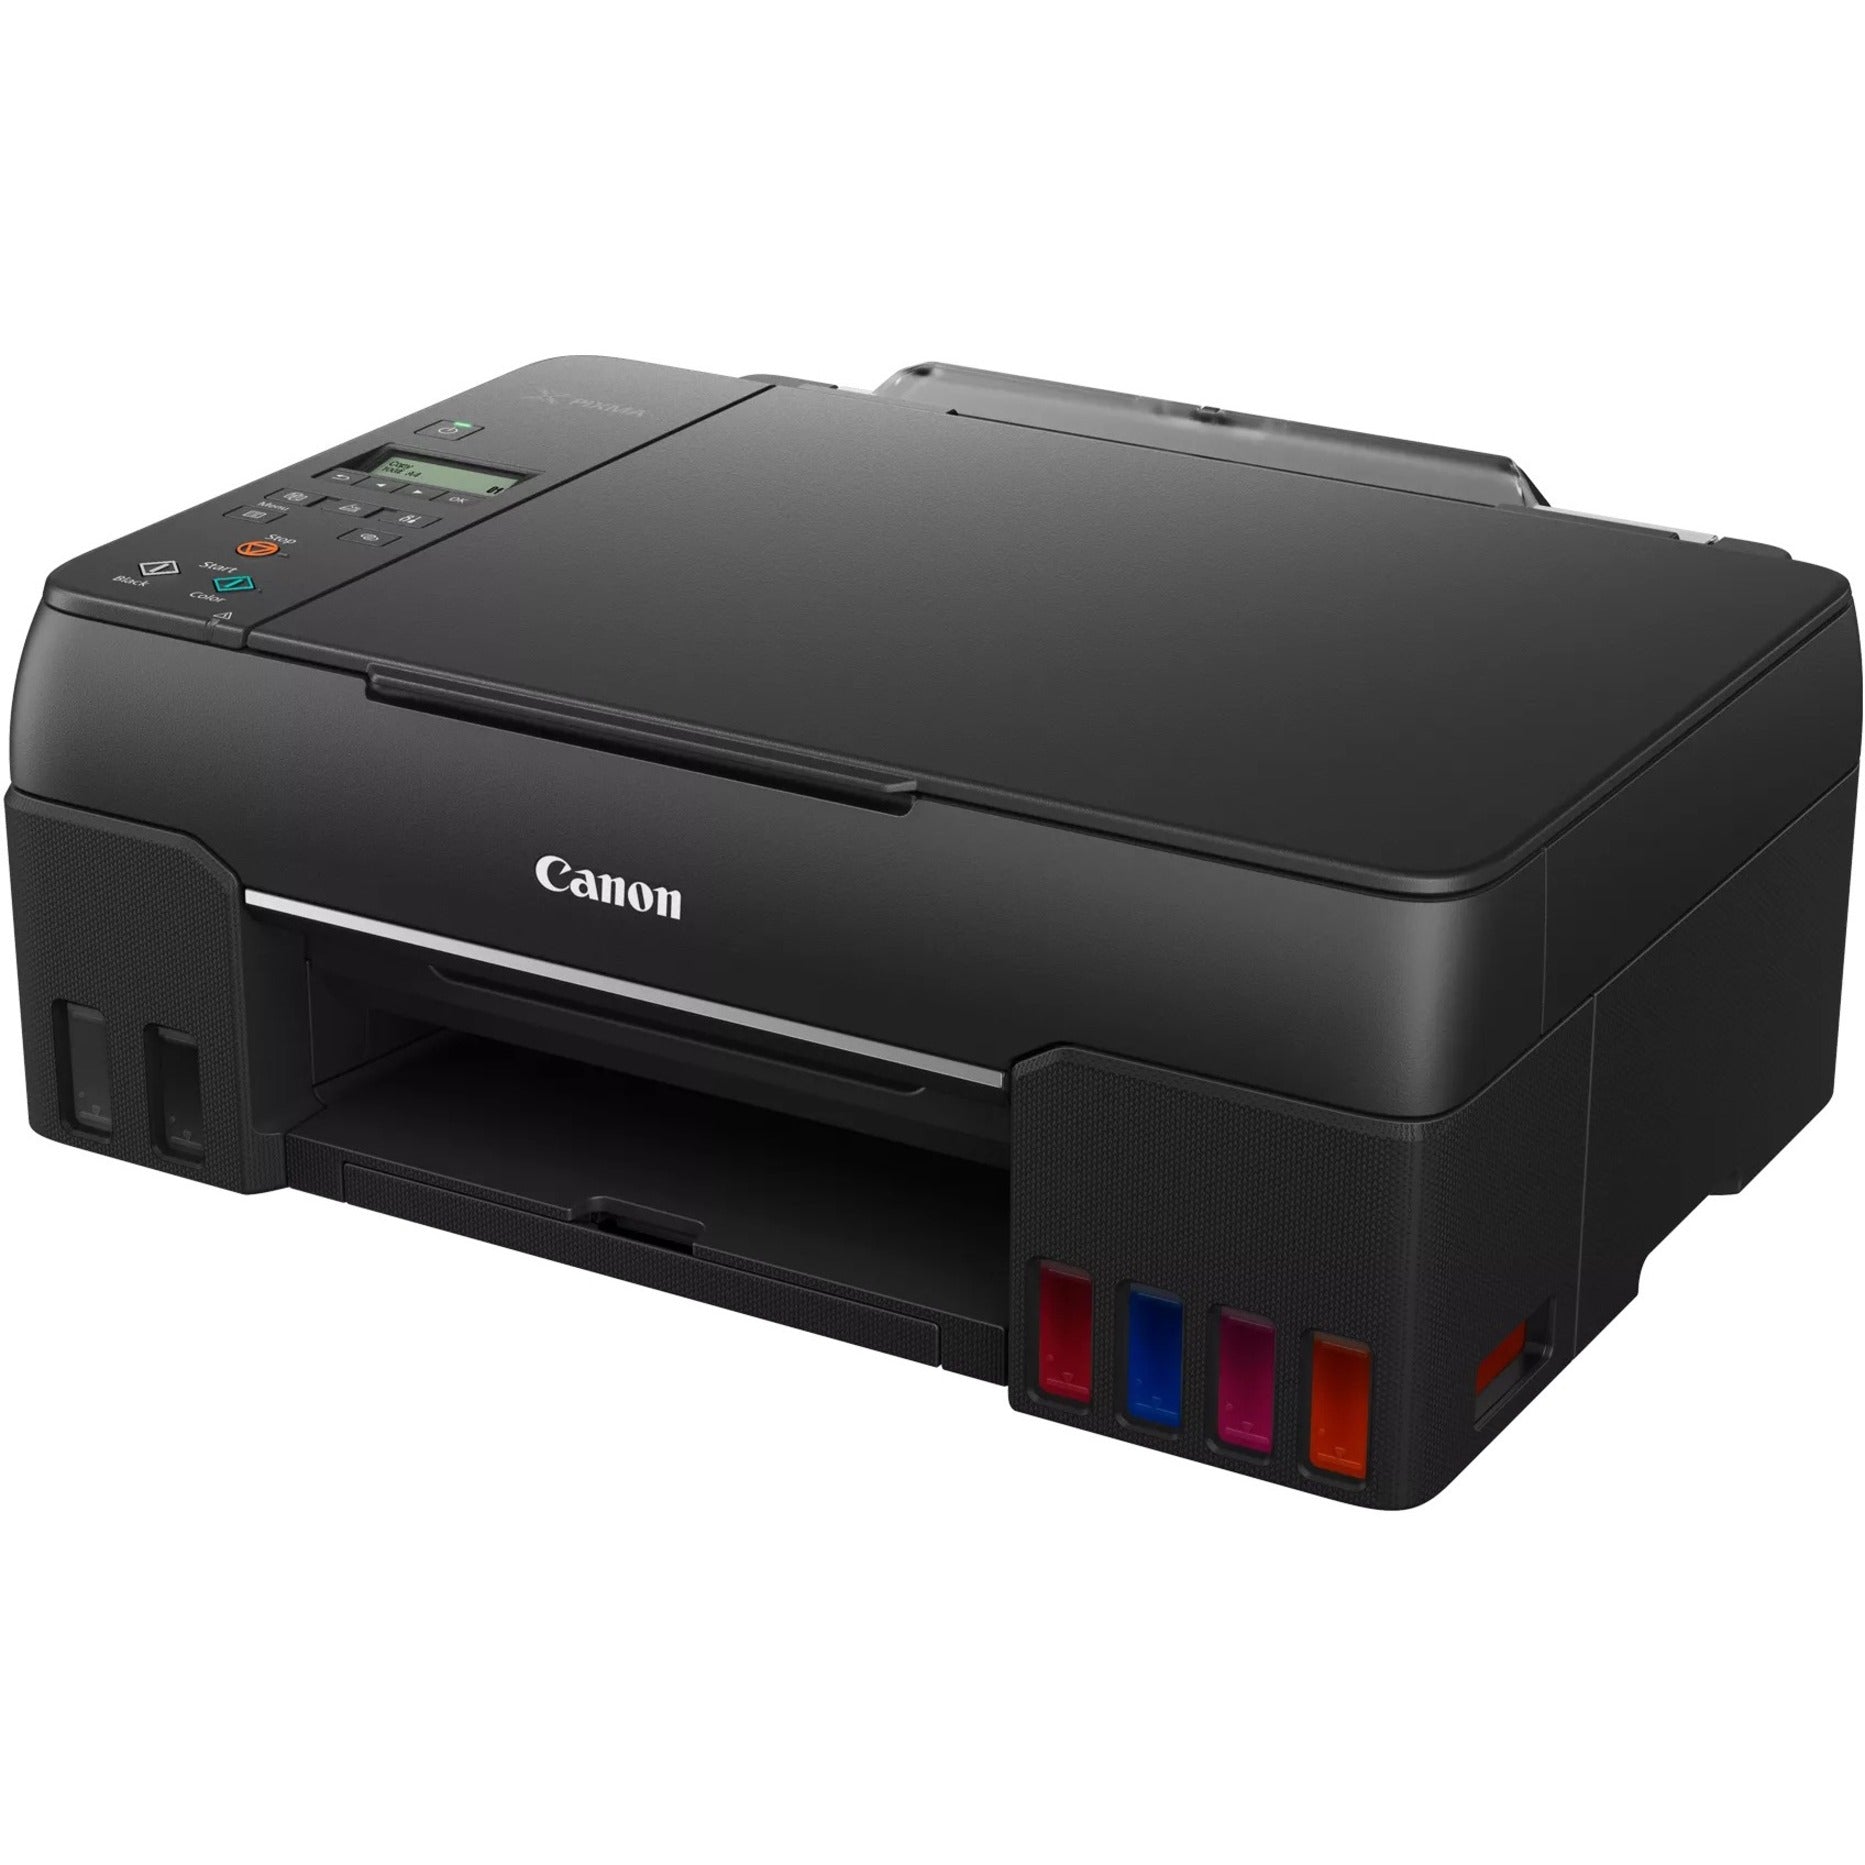 Canon 4620C002 PIXMA G620 Wireless All-In-One Inkjet Printer, Black